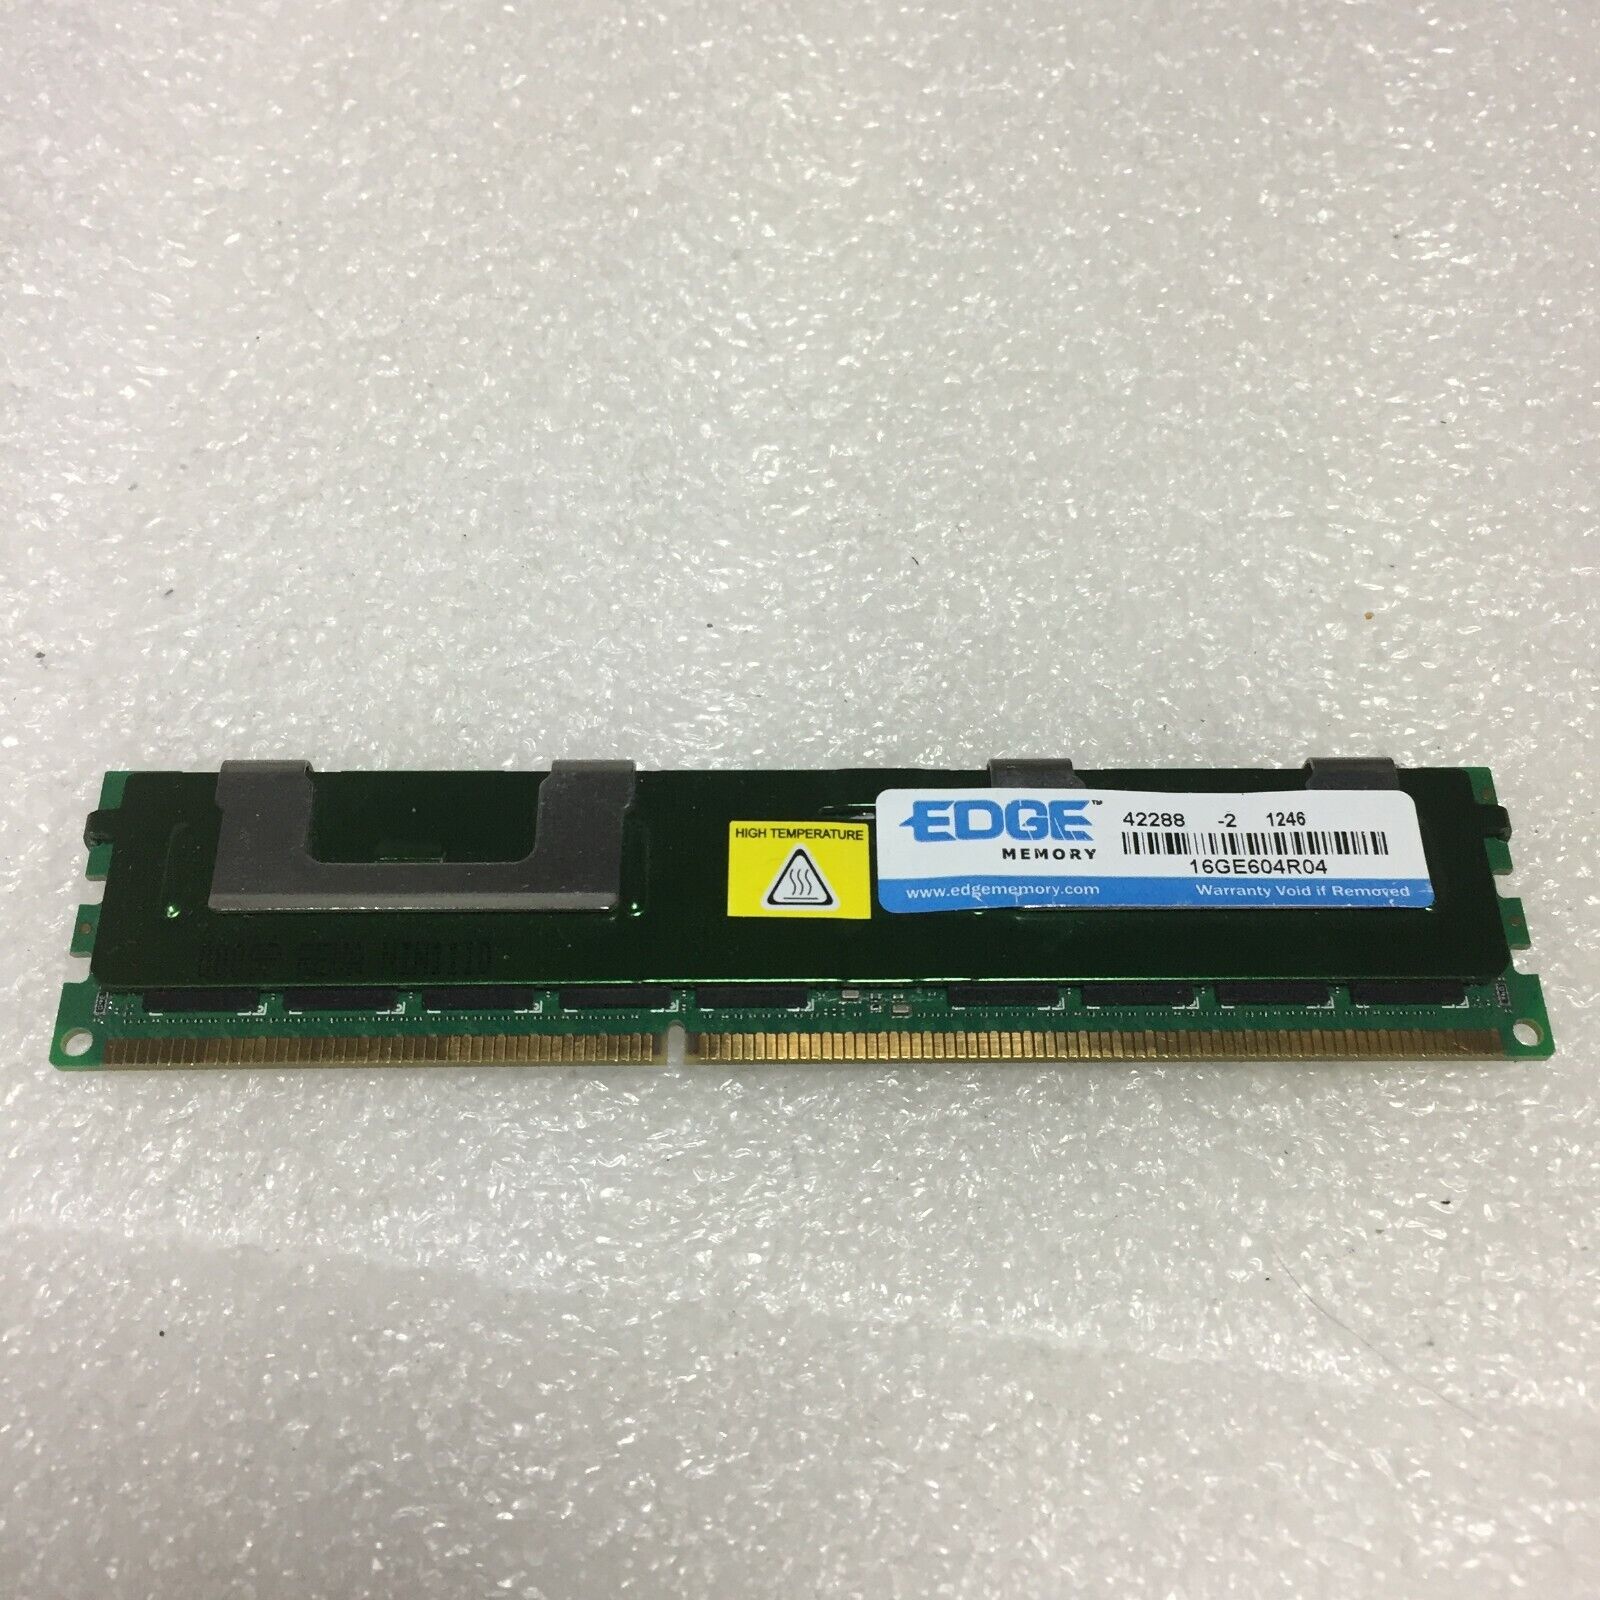 Edge Memory 16GB PC3-8500R DDR3-1066MHz ECC REG Server RAM Memory 16GE604R04